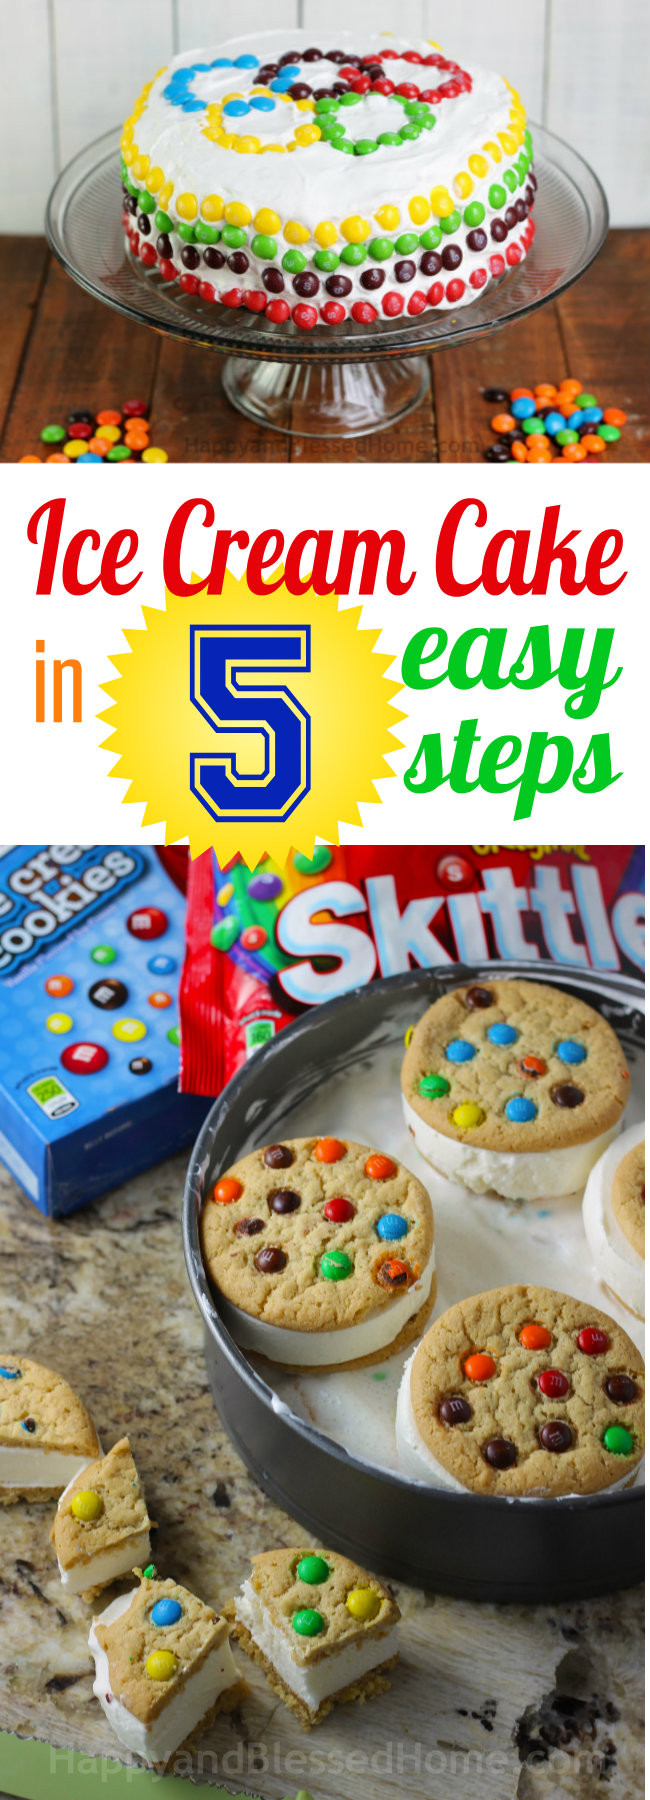 Easy Ice Cream Cake Recipes For Kids
 5 Step Easy Ice Cream Cake Recipe and FREE Olympic